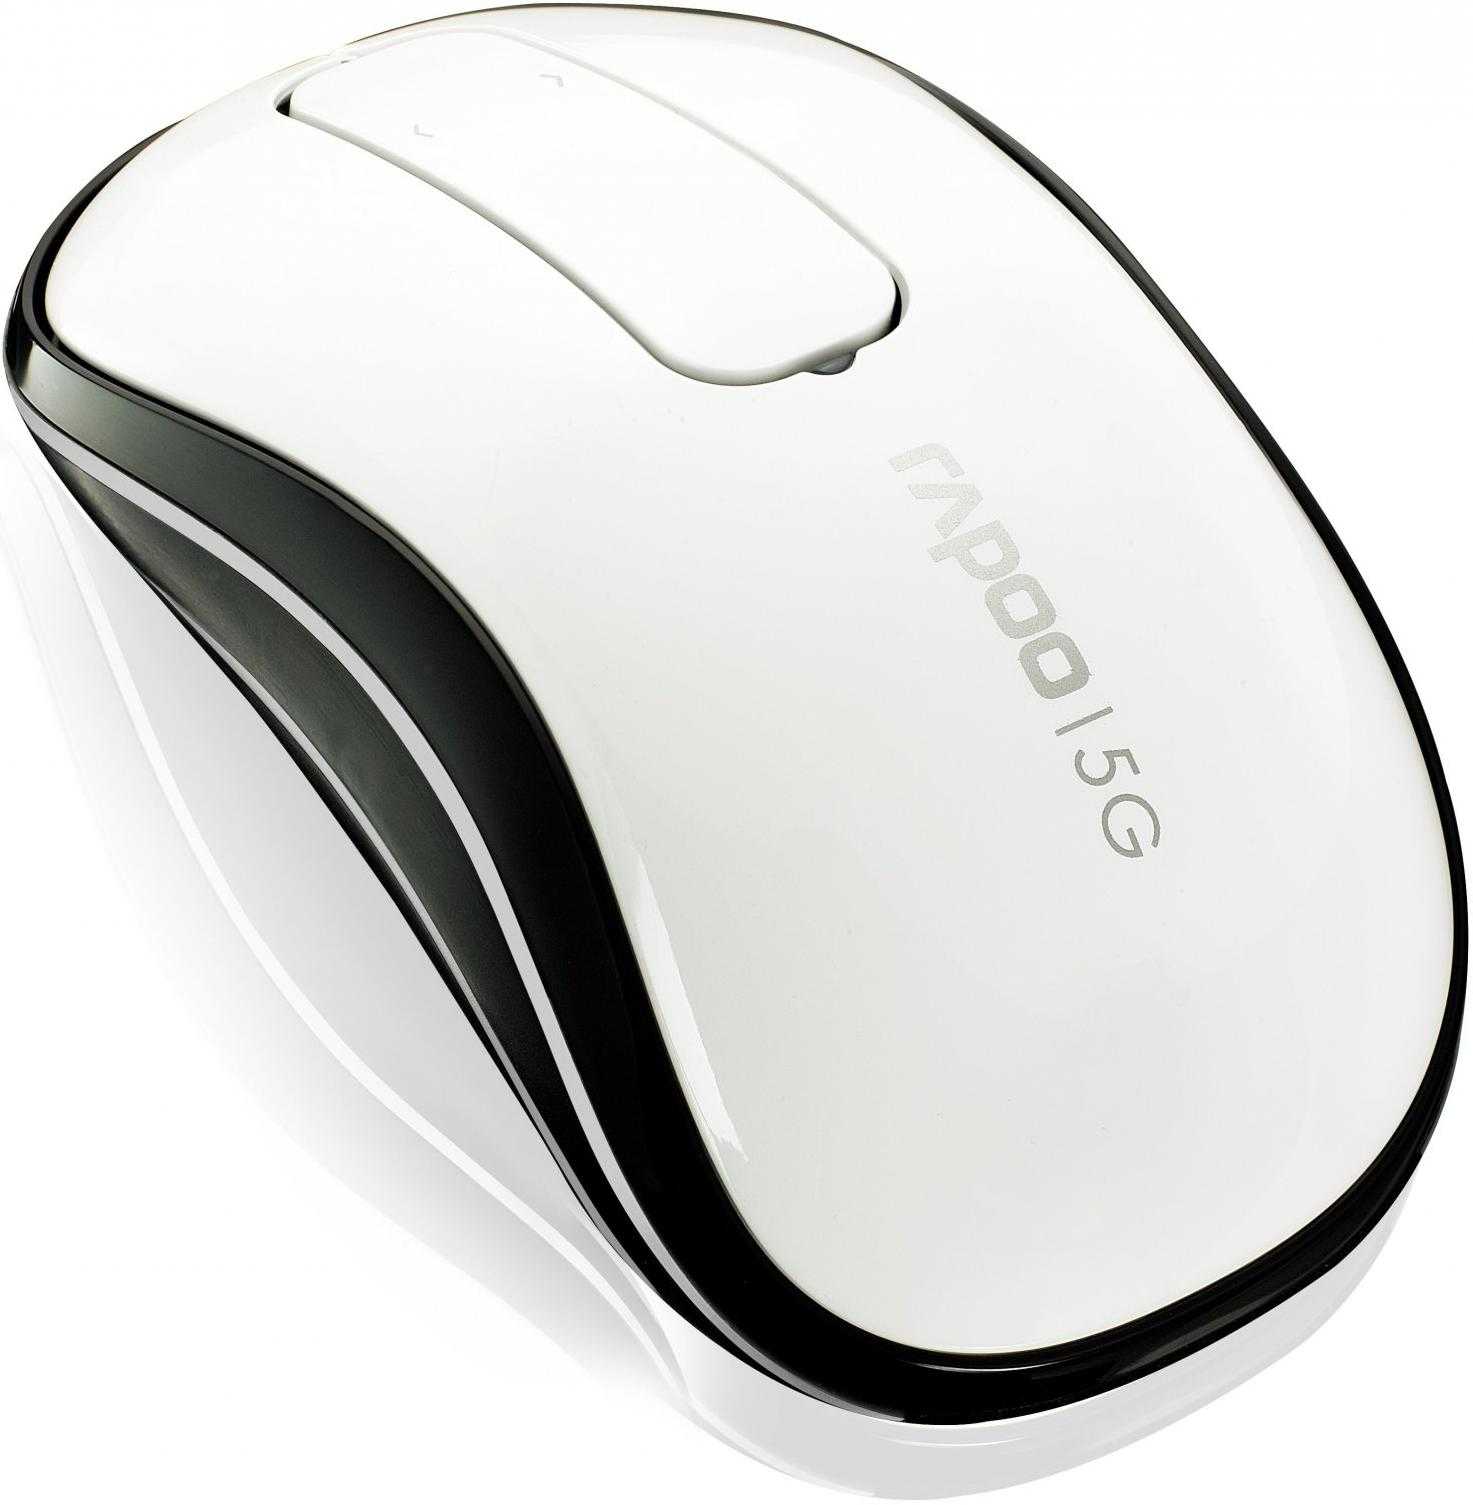 Rapoo wireless touch mouse t120p green usb - купить , скидки, цена, отзывы, обзор, характеристики - мыши